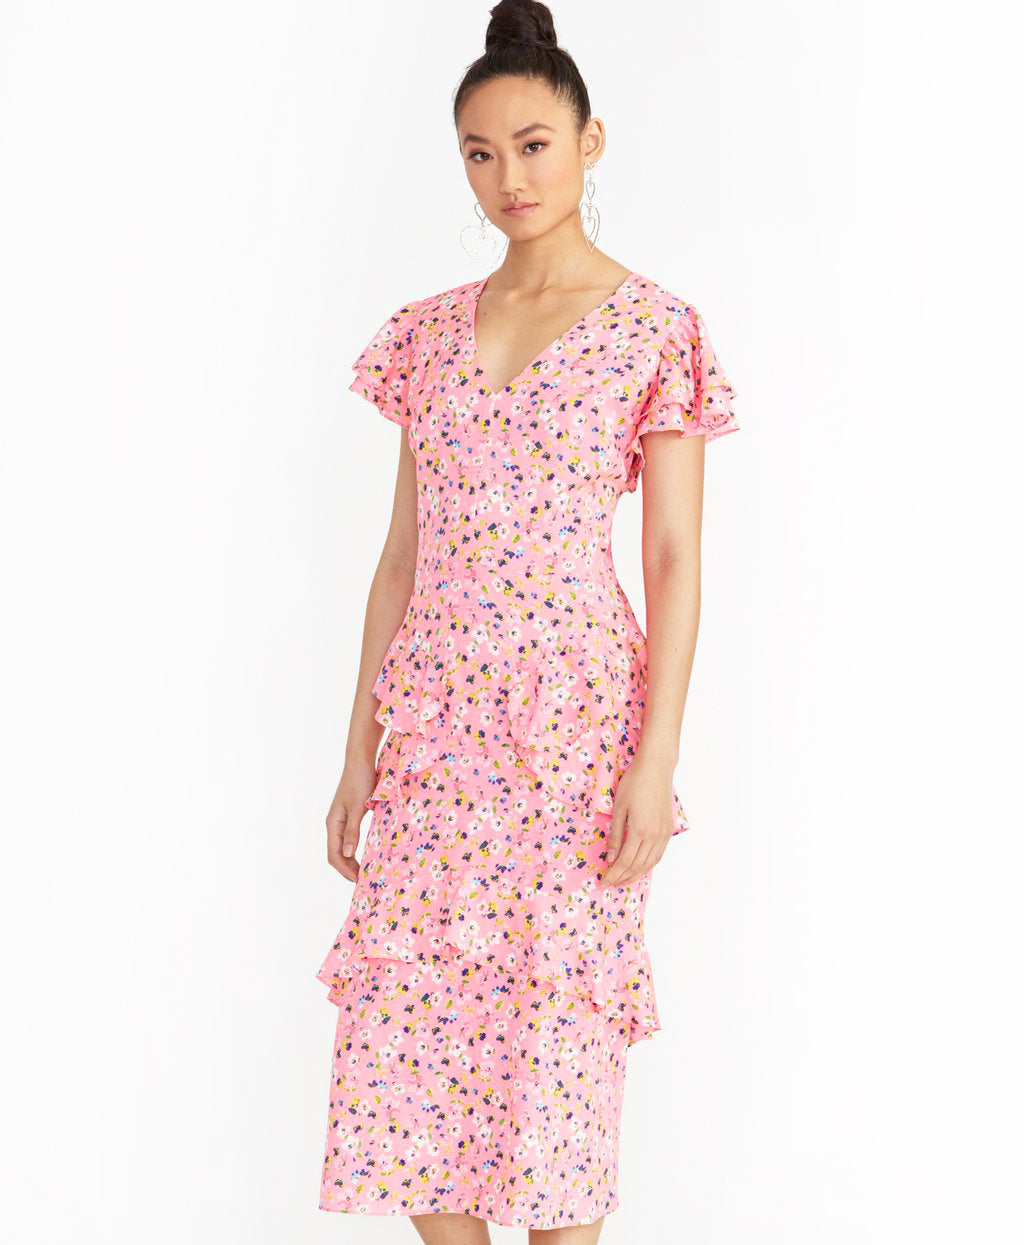 Fabianne Dress | Pink Floral Combo